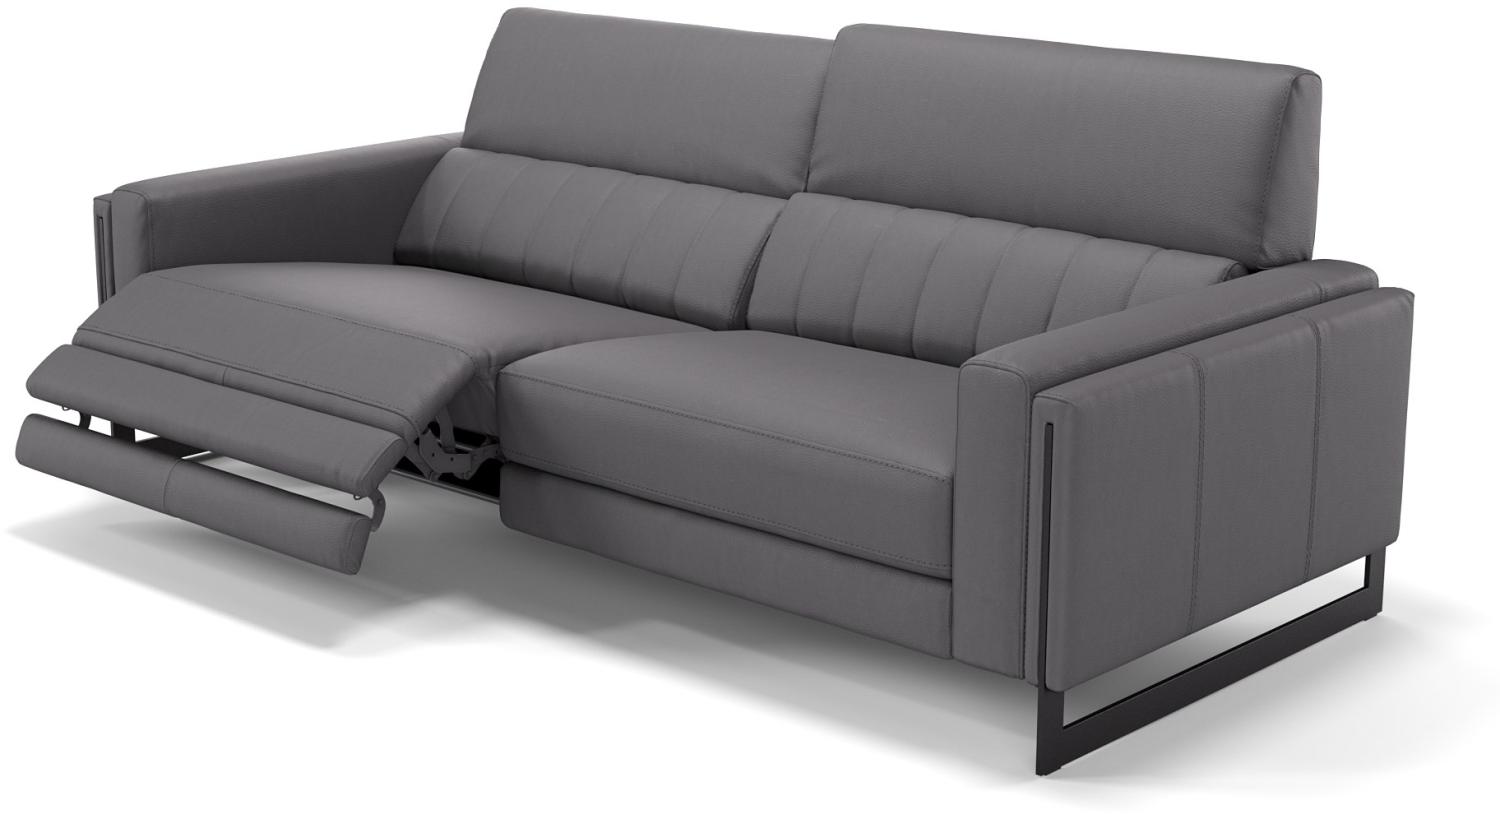 Sofanella 3-Sitzer MARA Leder Sofa Sofagarnitur in Grau S: 216 Breite x 101 Tiefe Bild 1